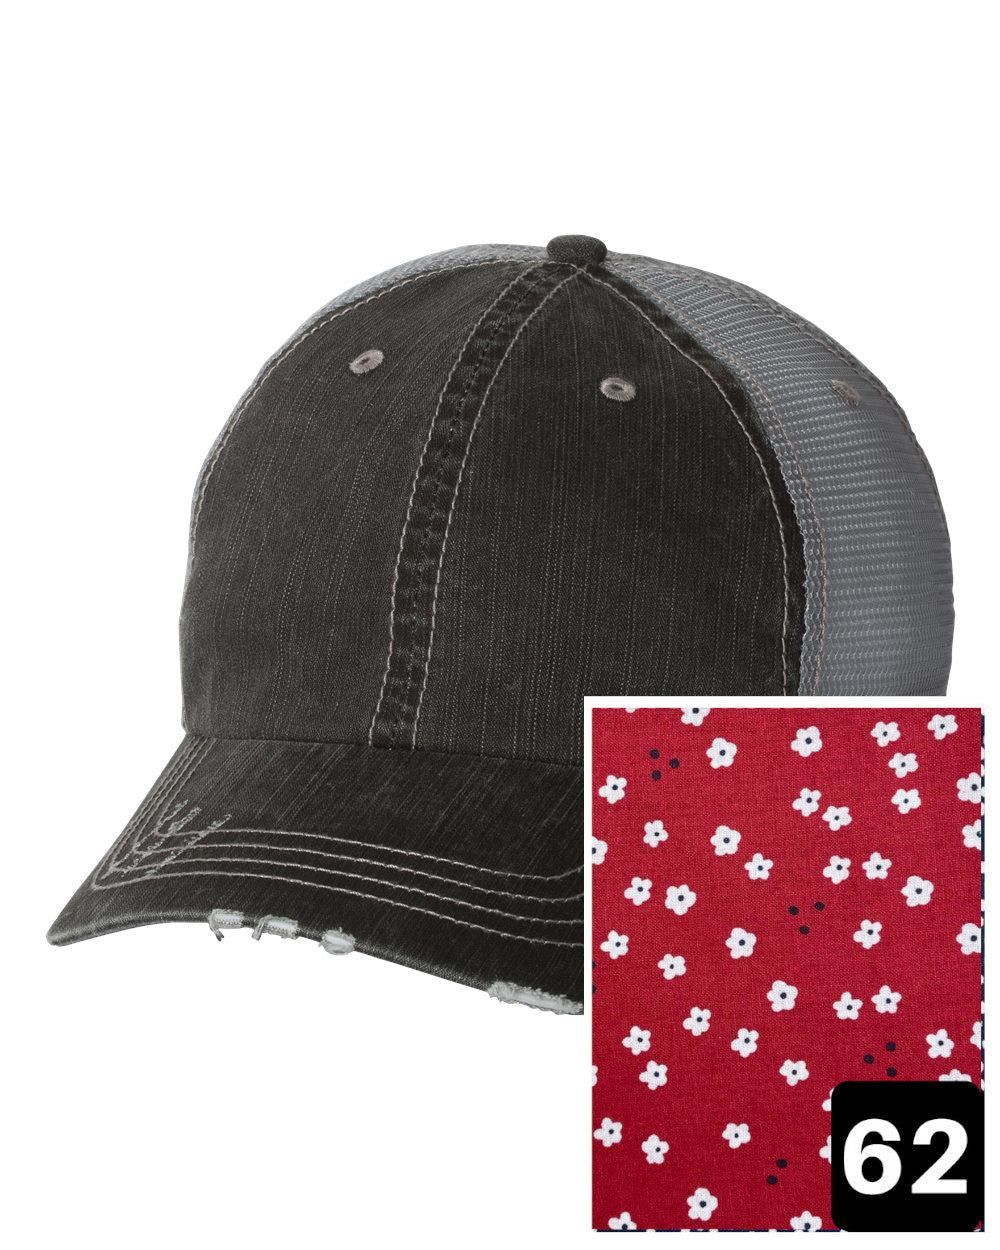 Washington Hat | Gray Distressed Trucker Cap | Many Fabric Choices